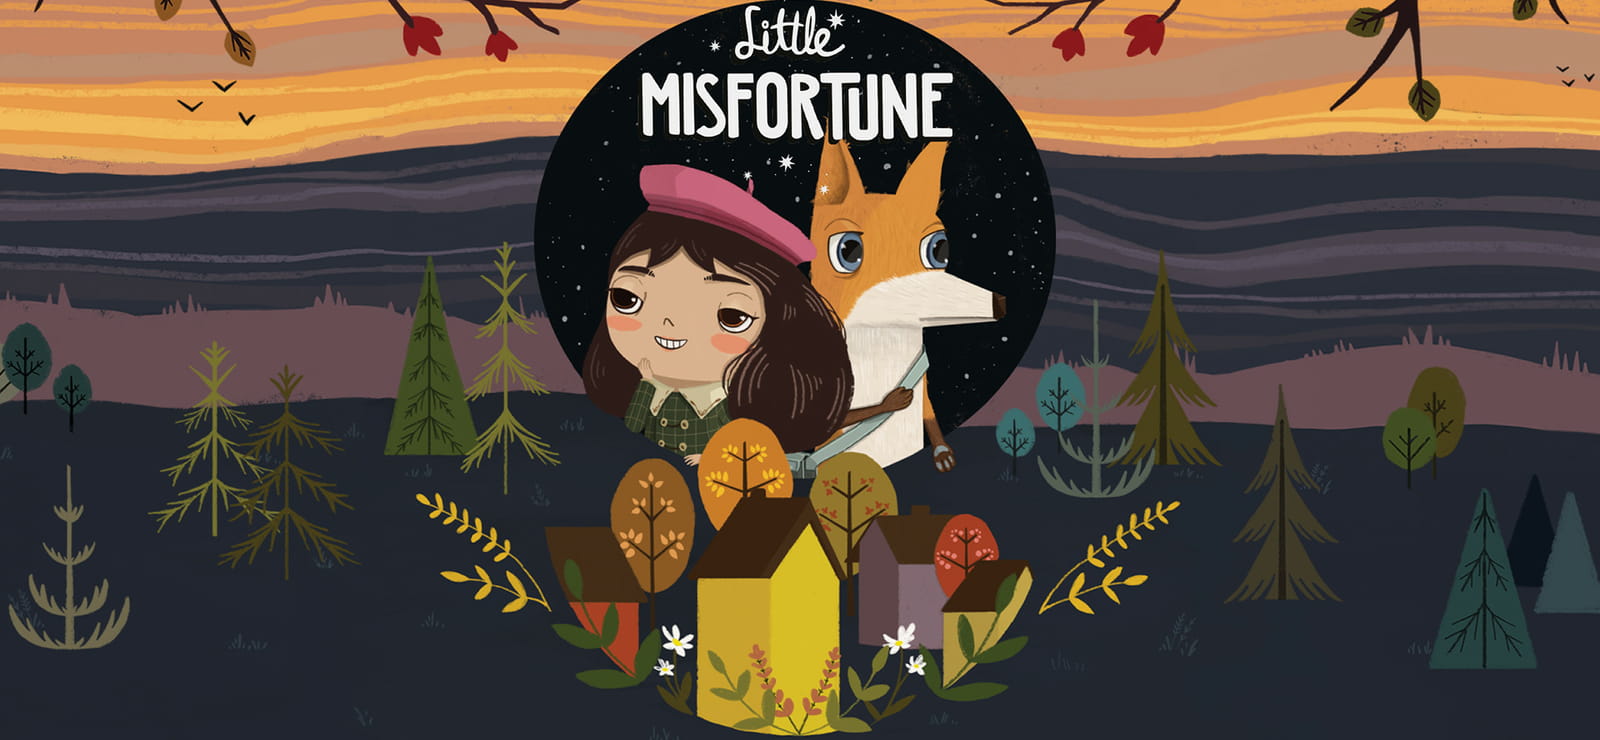 Little Misfortune Official Artbook